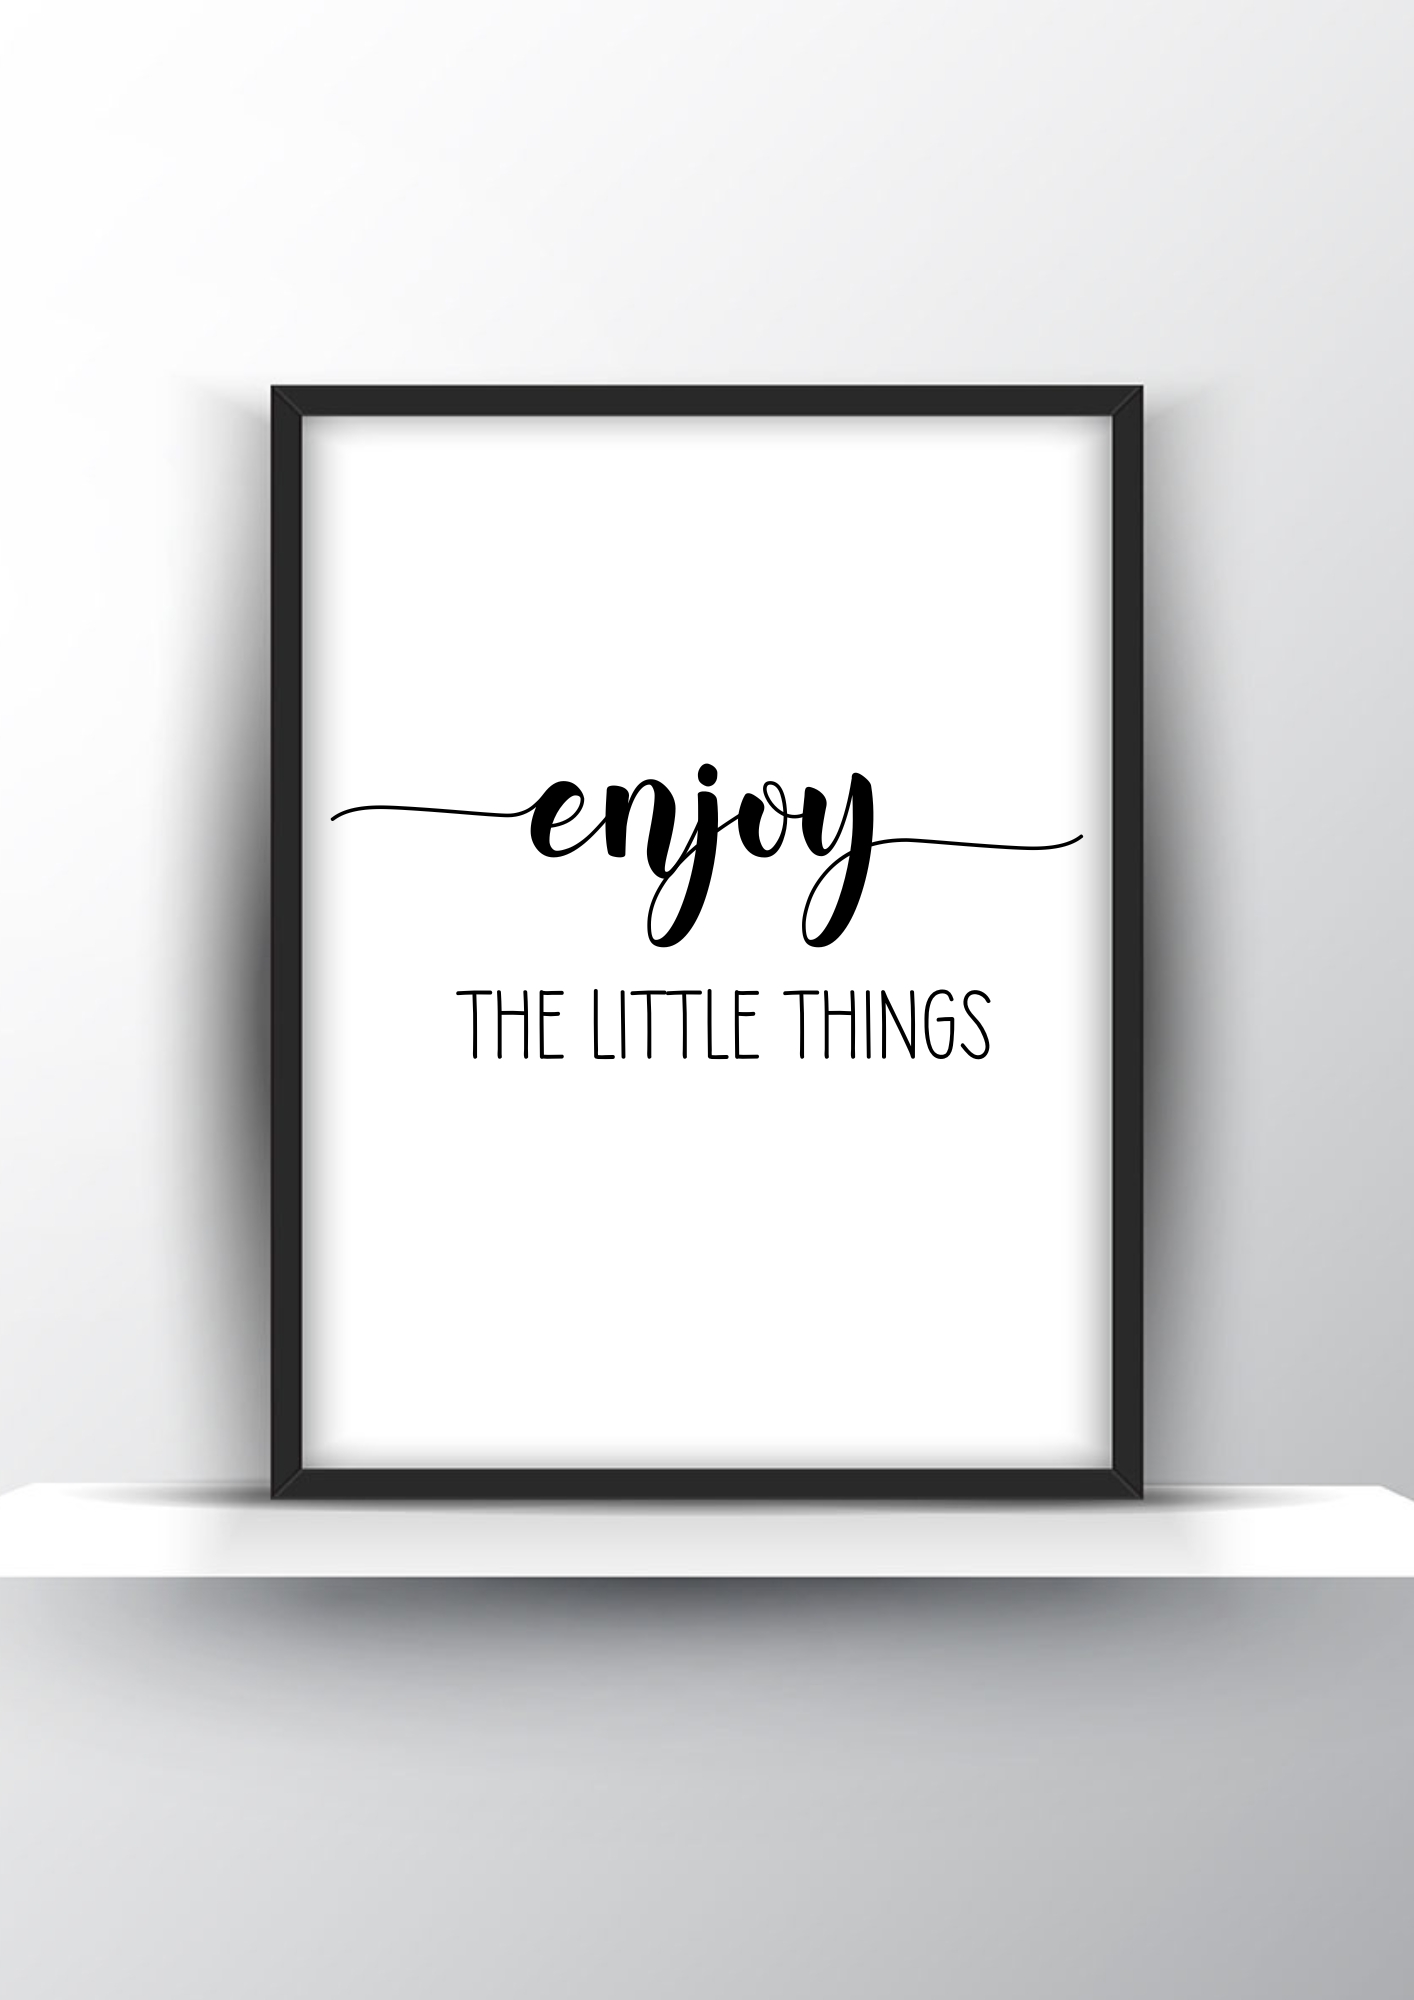 Enjoy The Little Things Printable Wall Art - Motivational Wall Art - Home Decor - Digital Download